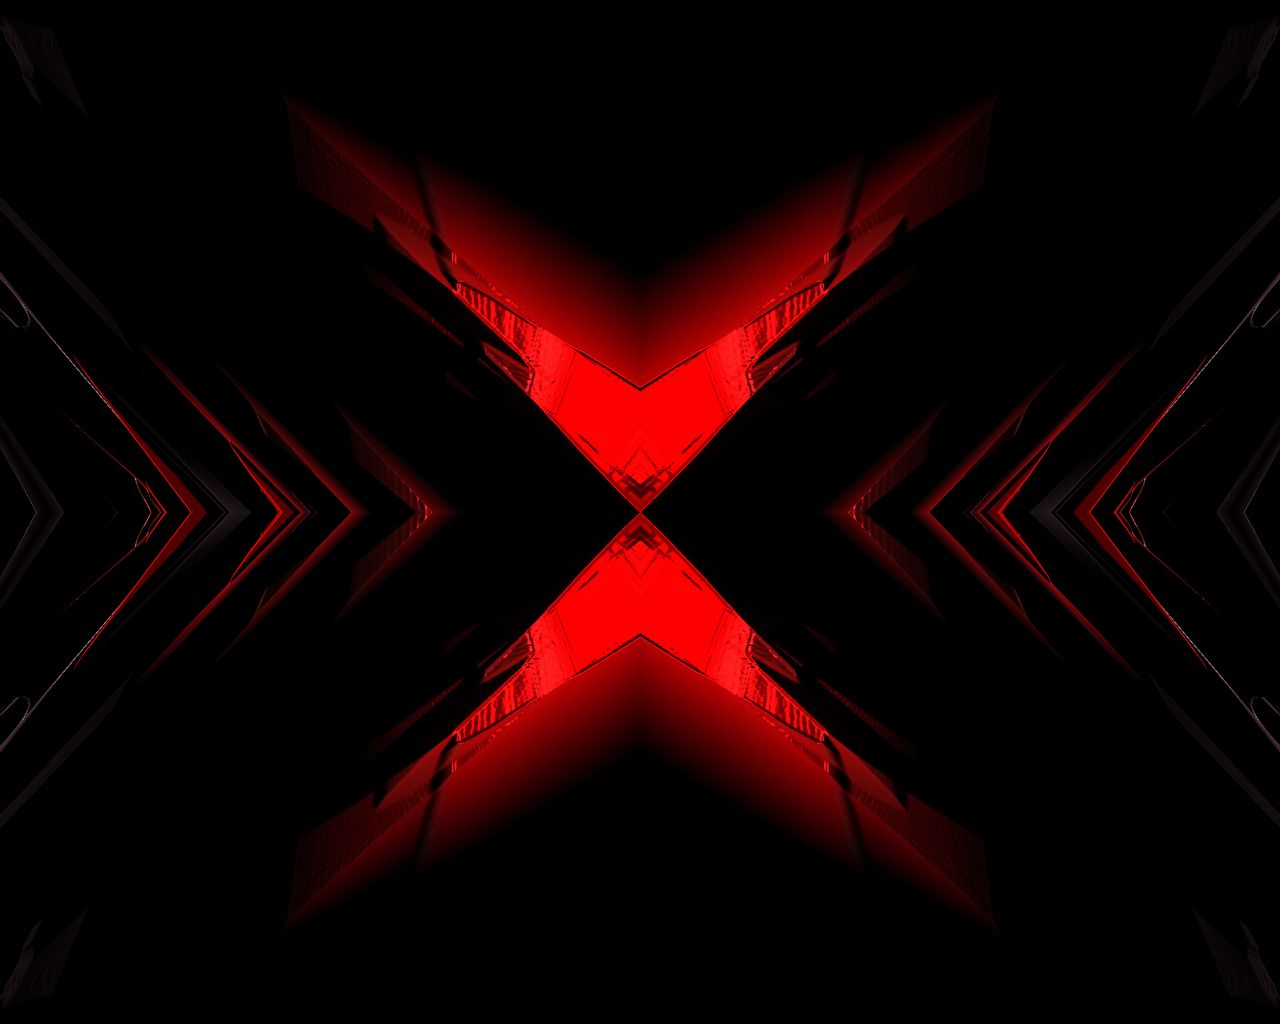 dark red and black background